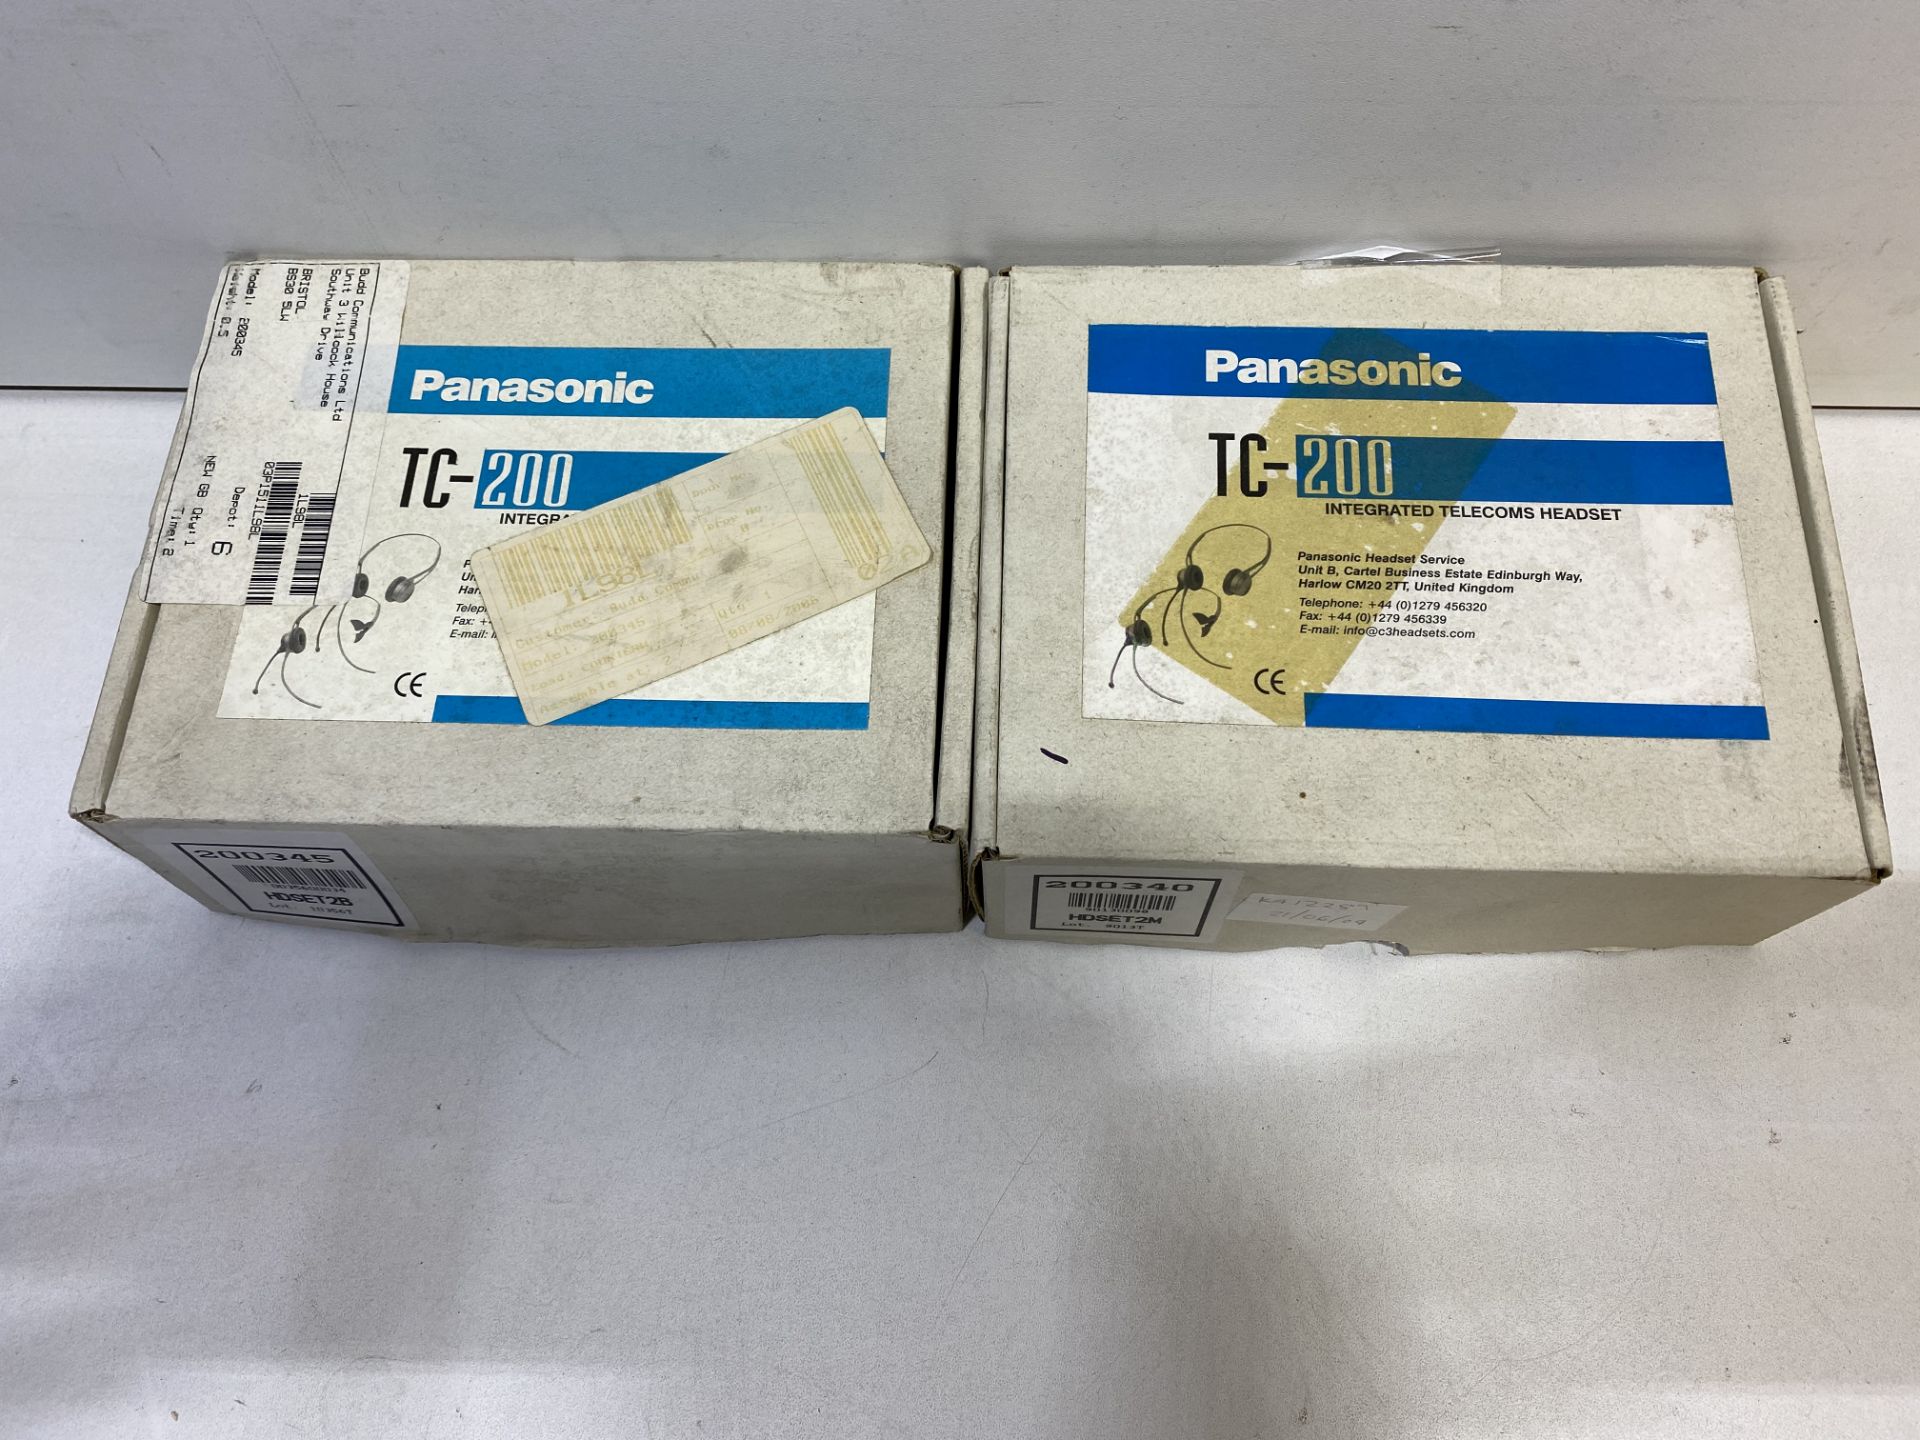 2 x Panasonic TC-200 Telcom Headsets